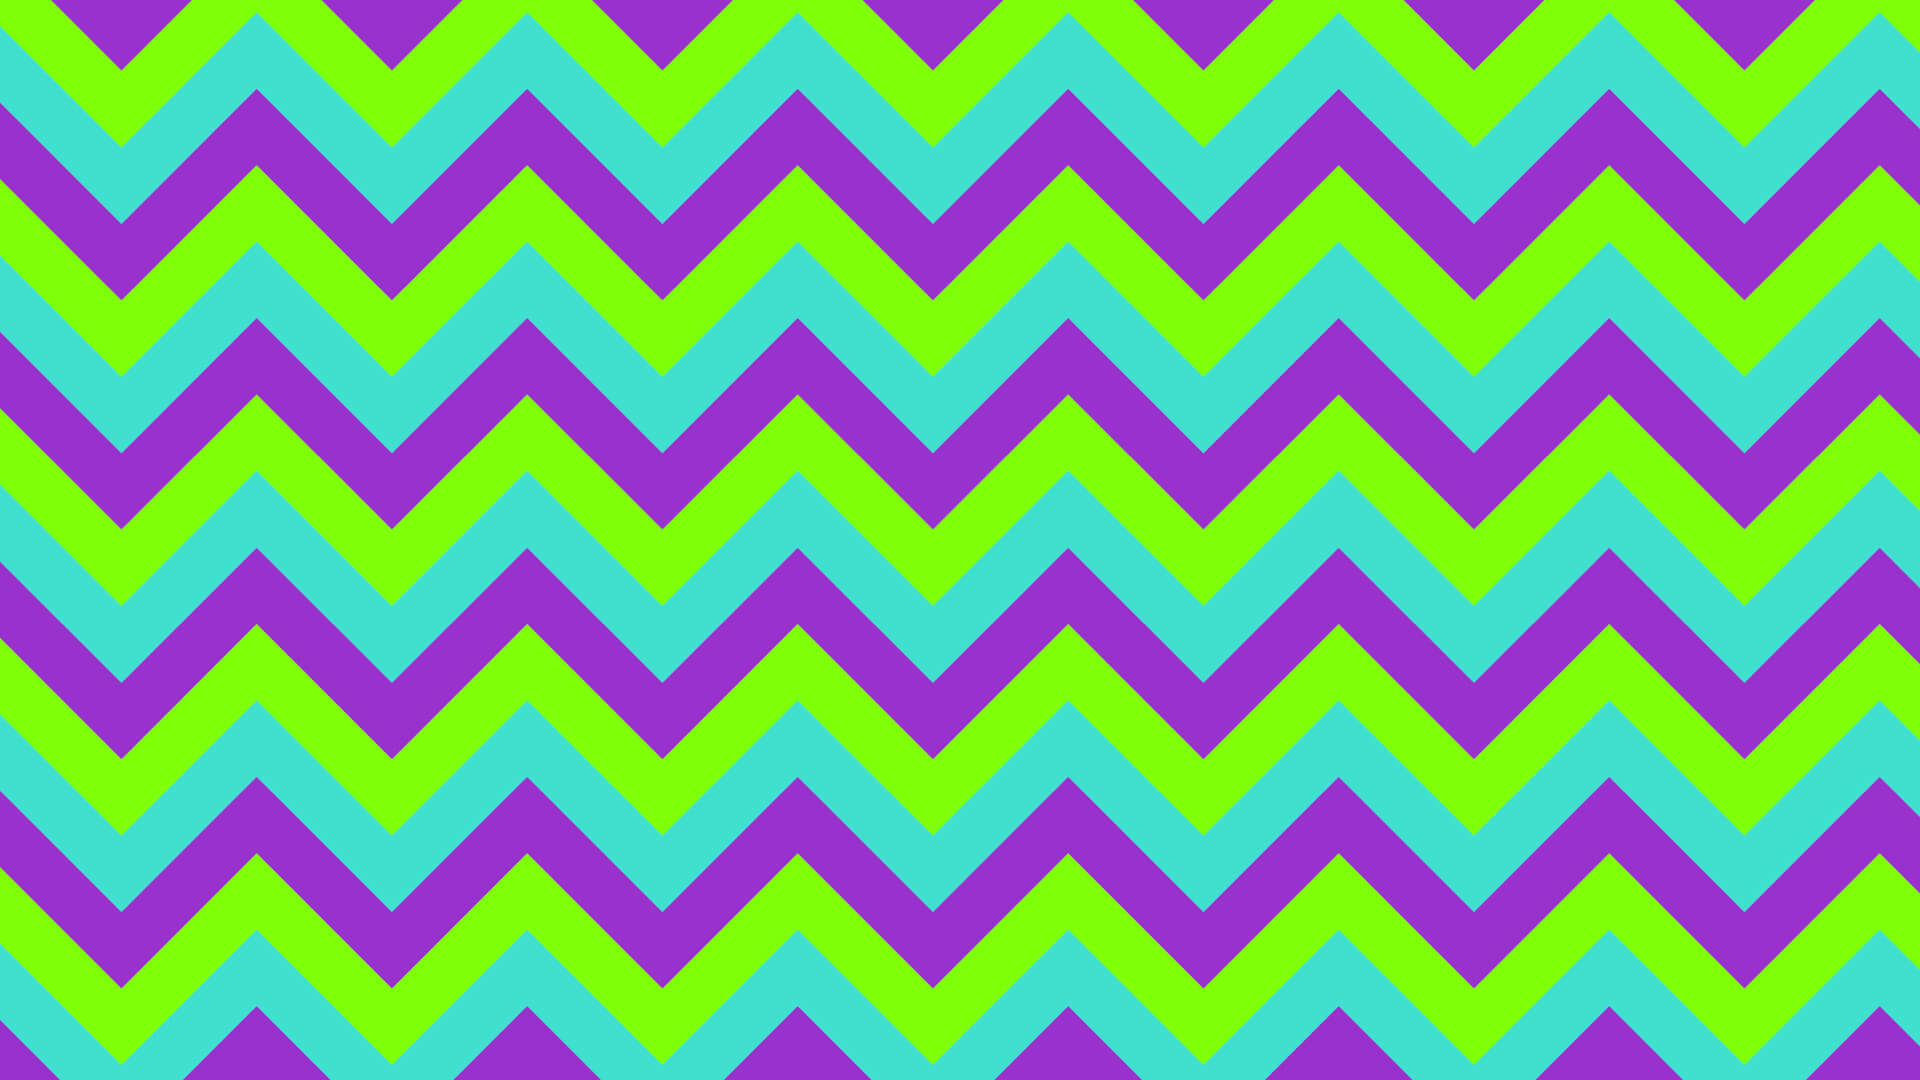 Zig-zag striped gradient pattern